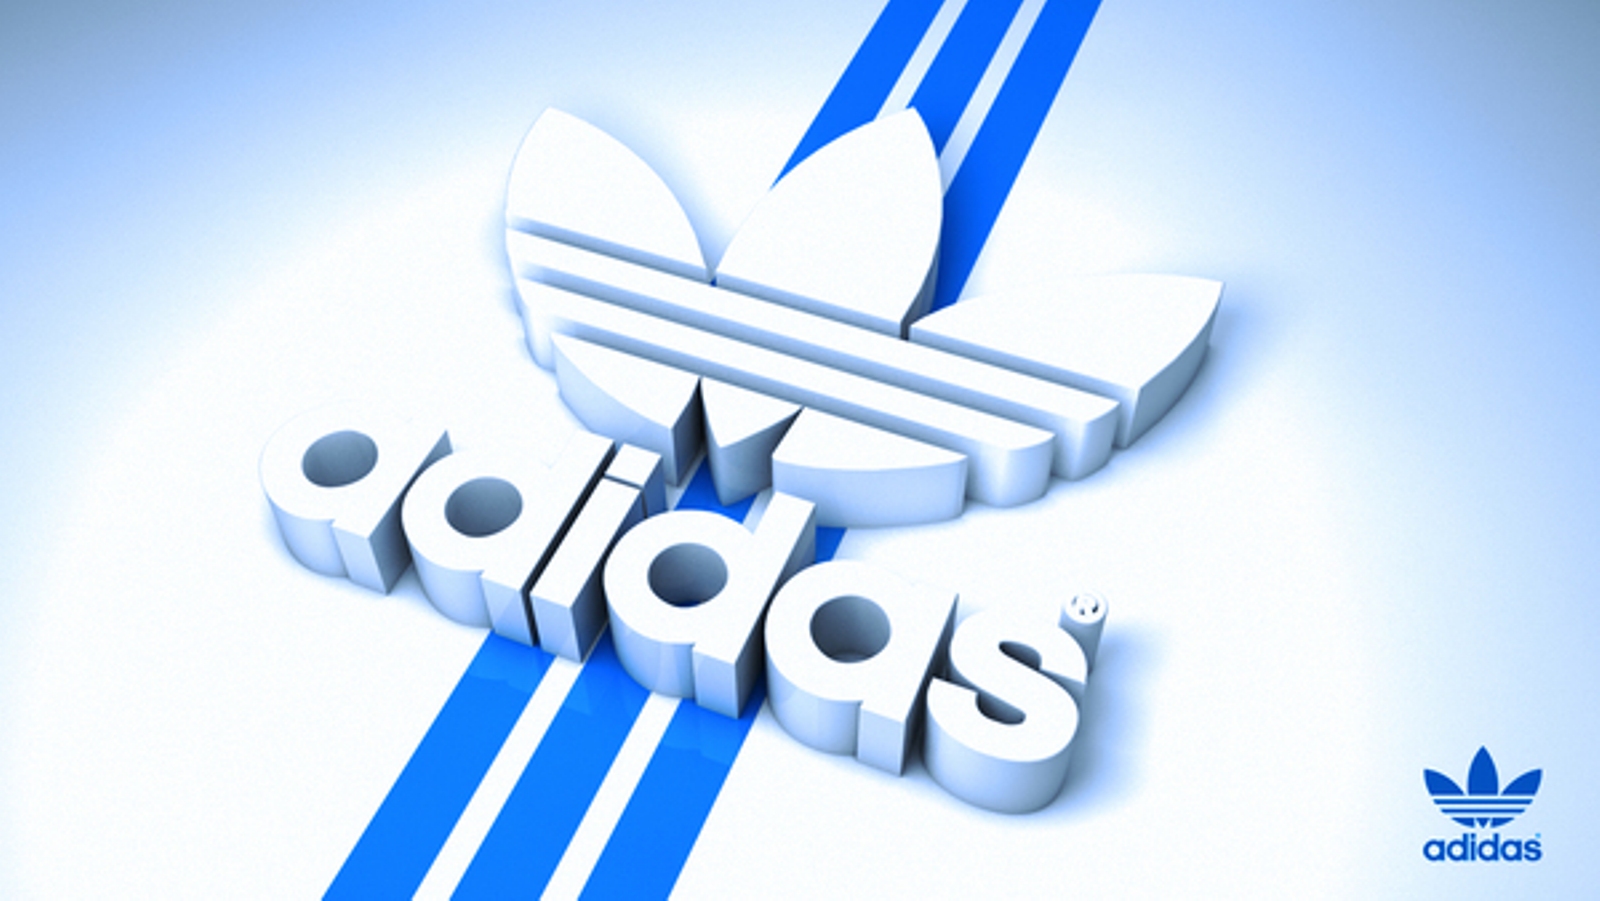 [49+] Cool Adidas Wallpapers on WallpaperSafari